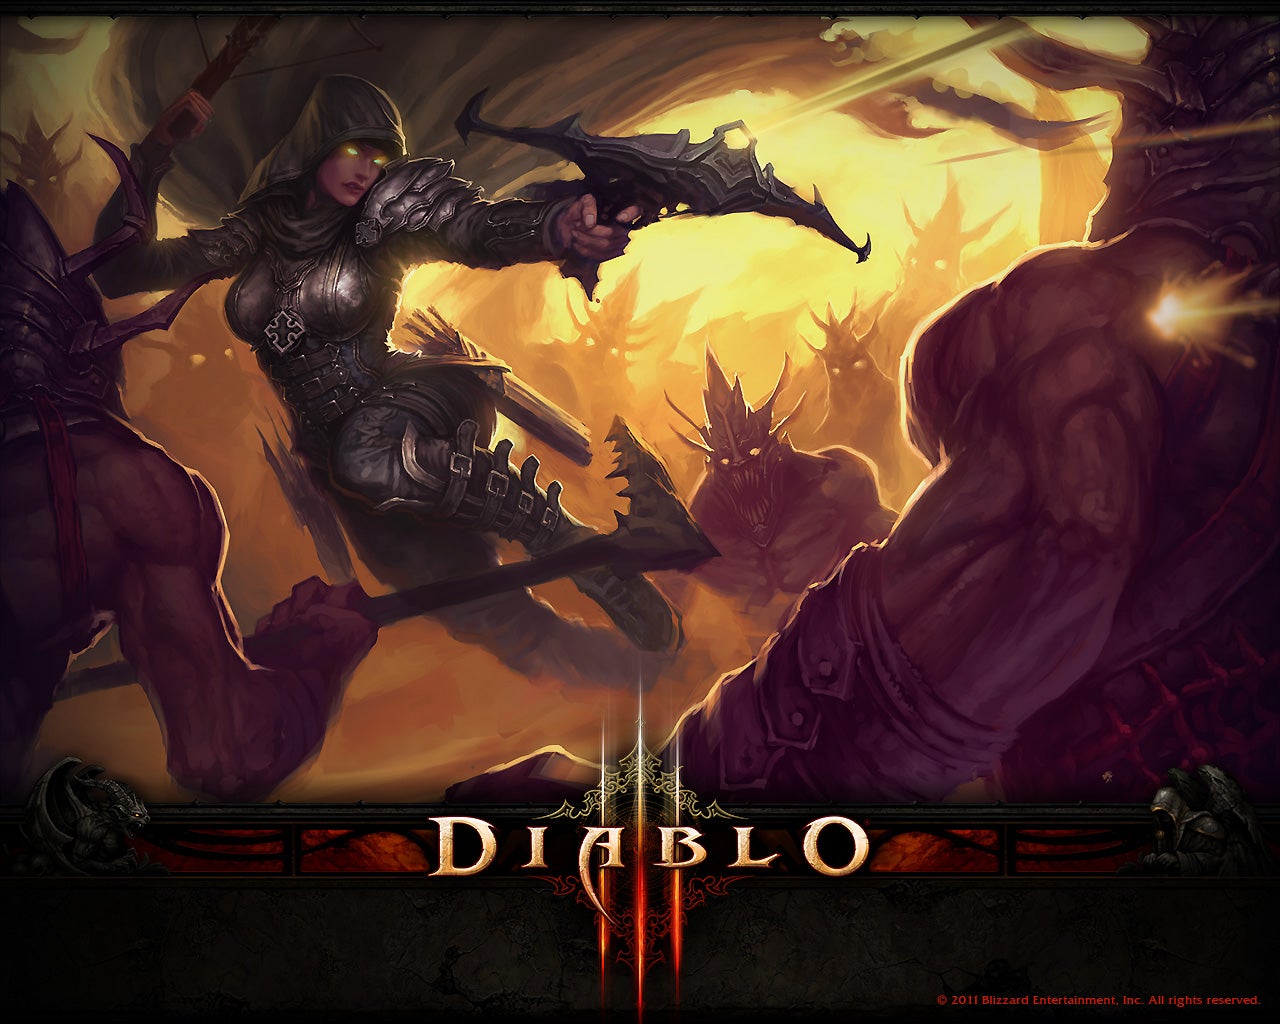 Diablo 3 Class Builds, Tips for Diablo 3 on Nintendo Switch | VG247